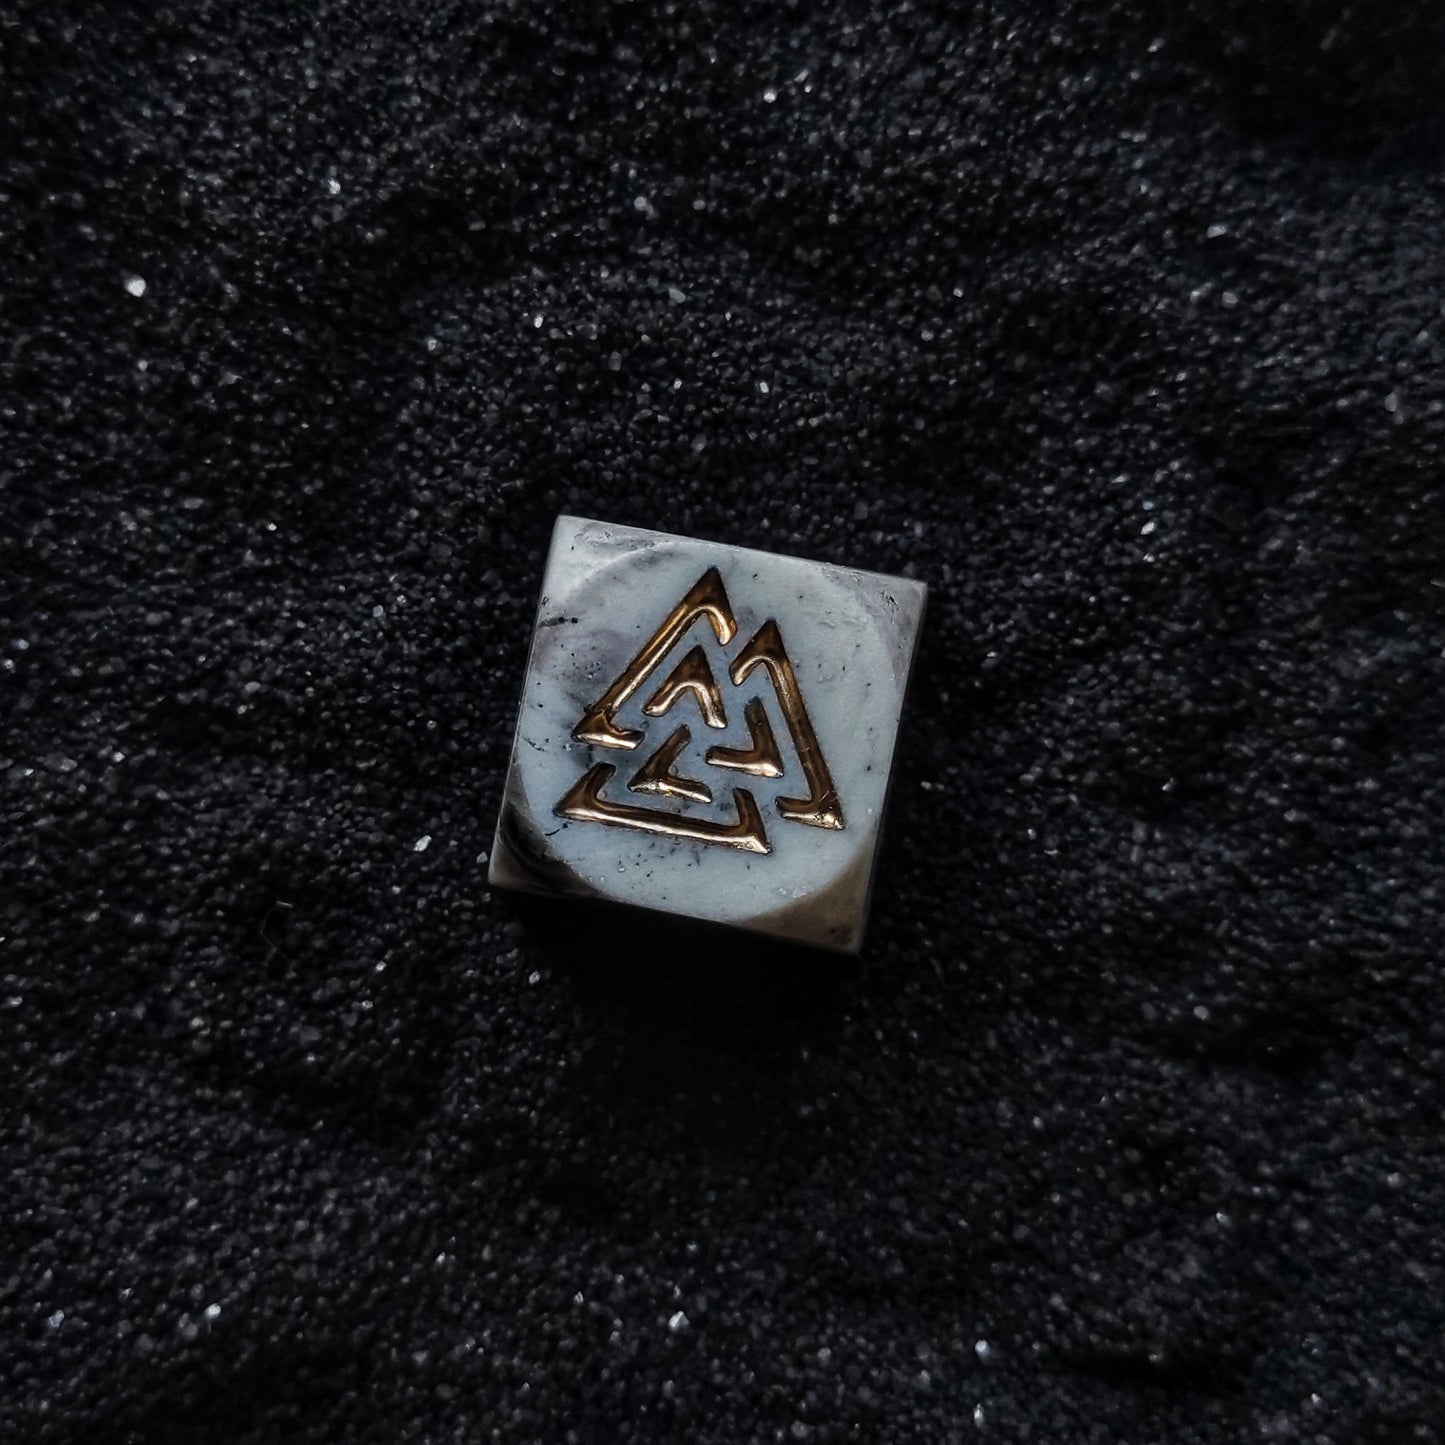 Valknut artisan keycaps | Ash collection